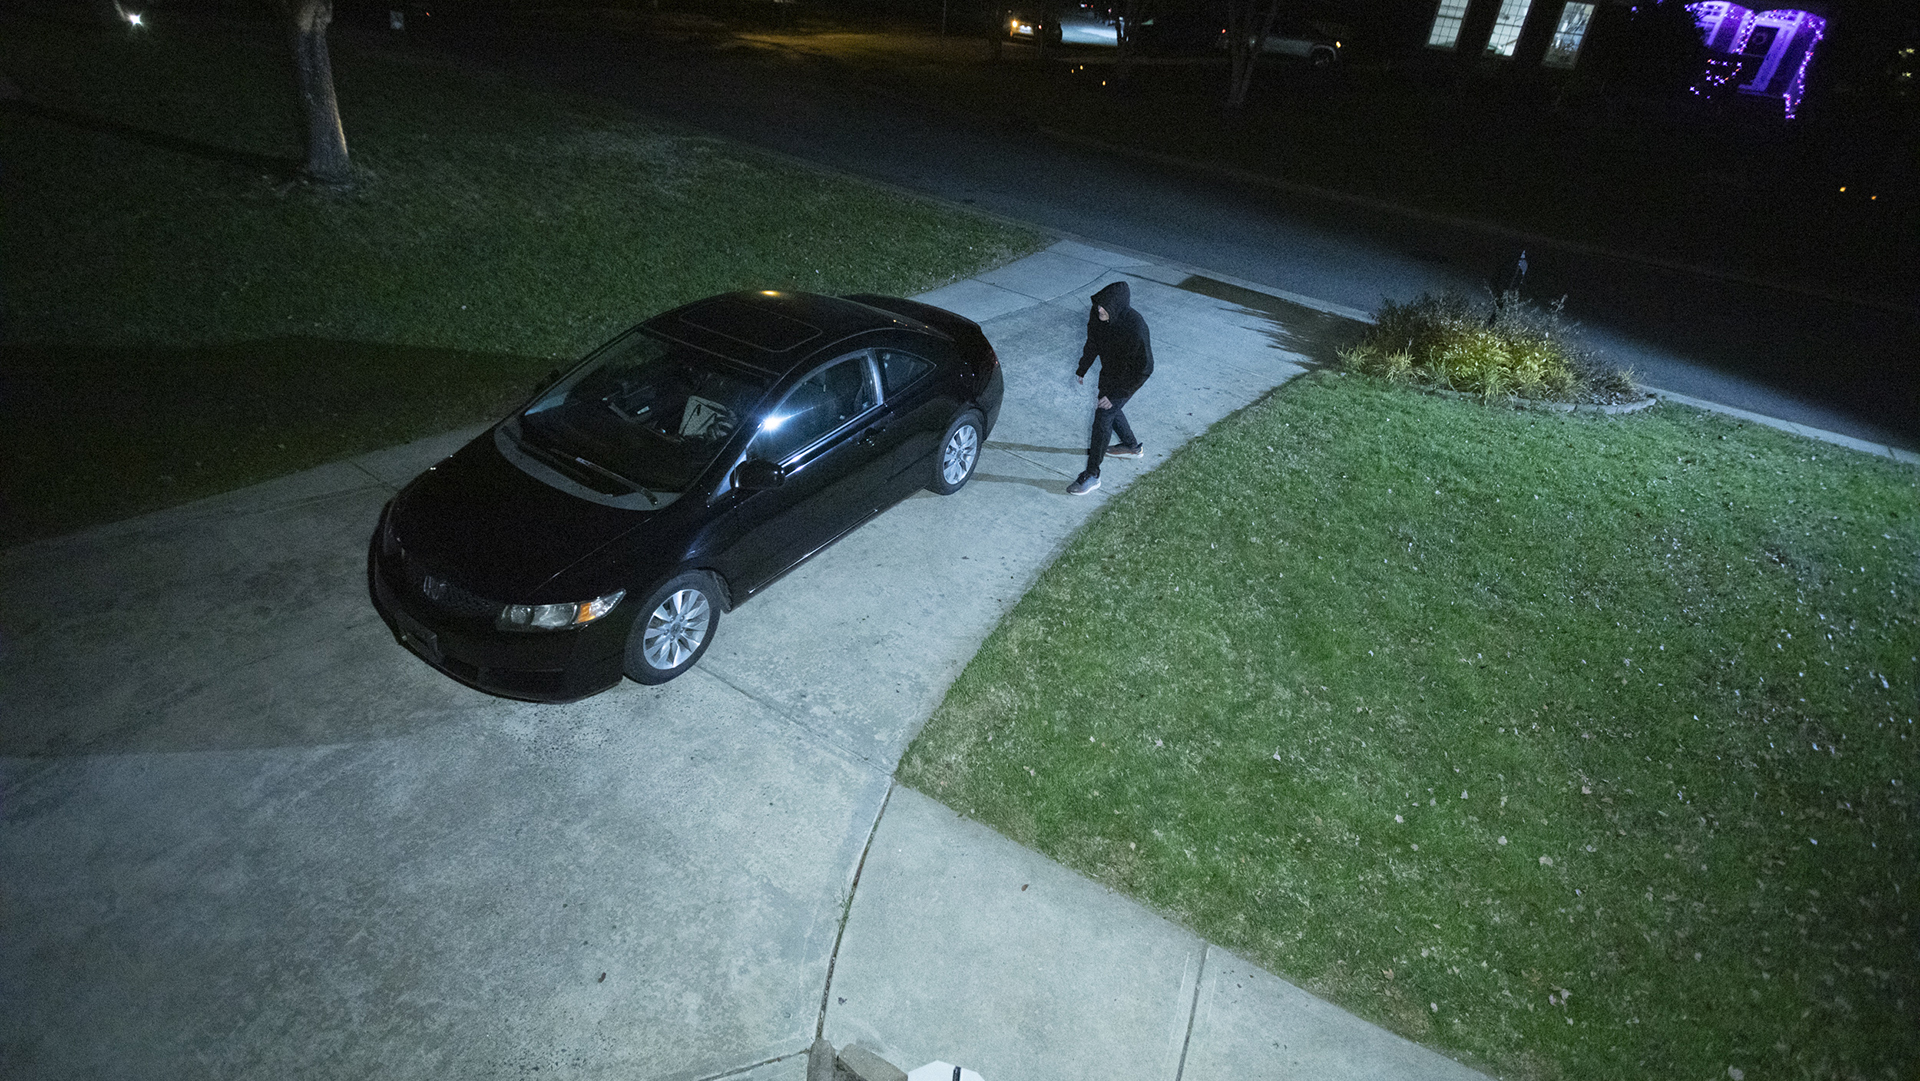 Thief approaching car